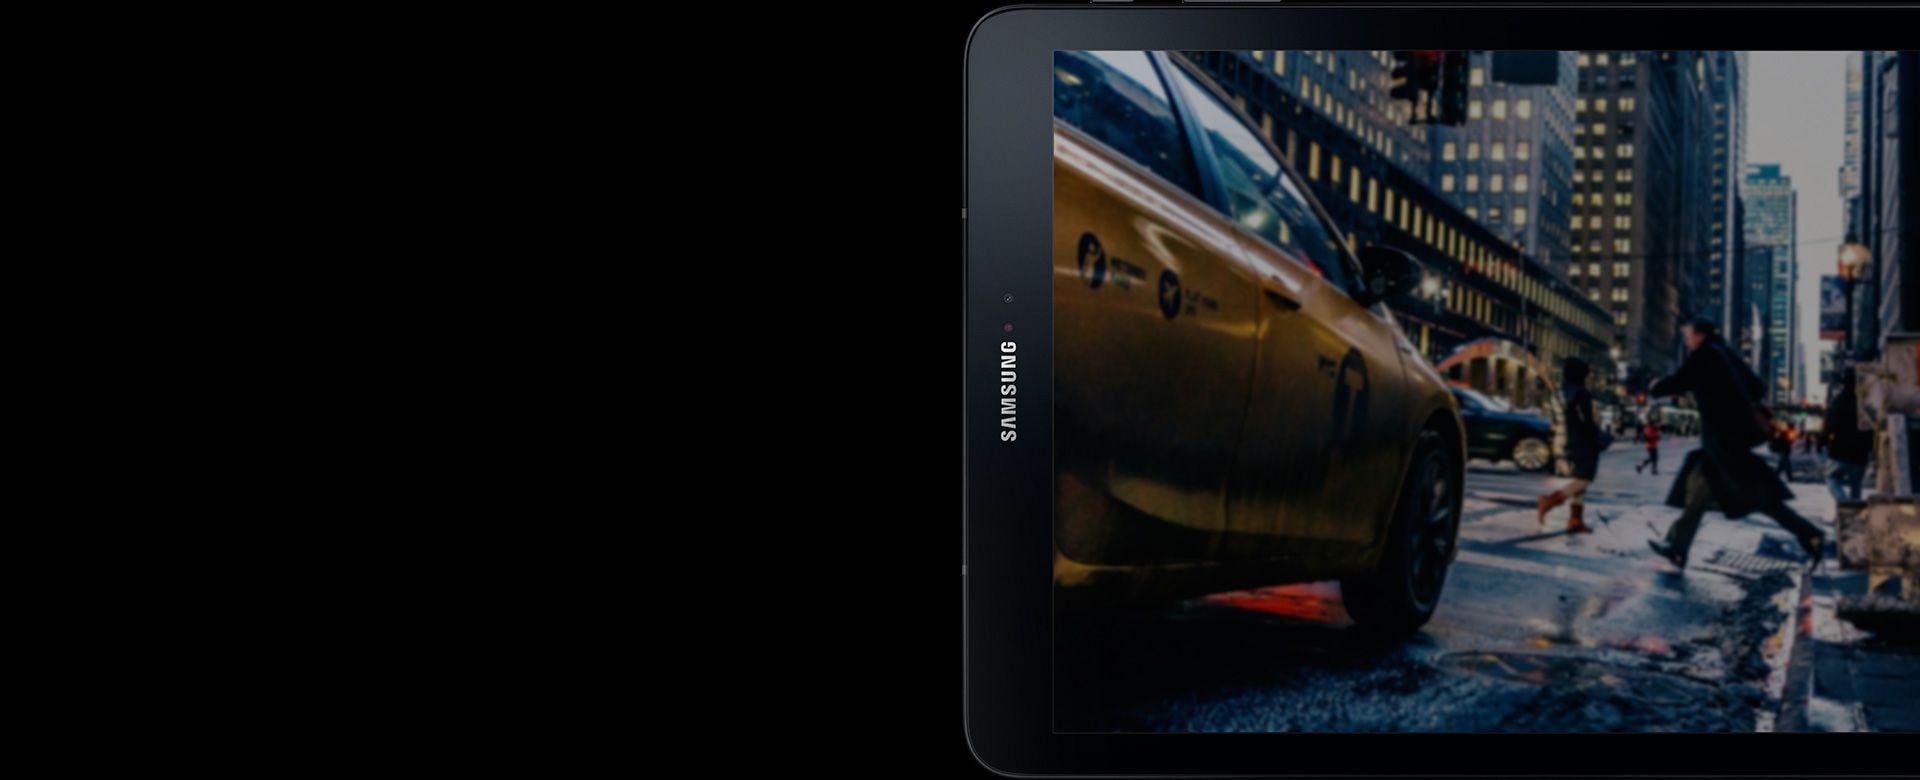 Galaxy Tab S3 stoji postrance sa slikom žutog taksija u središtu grada